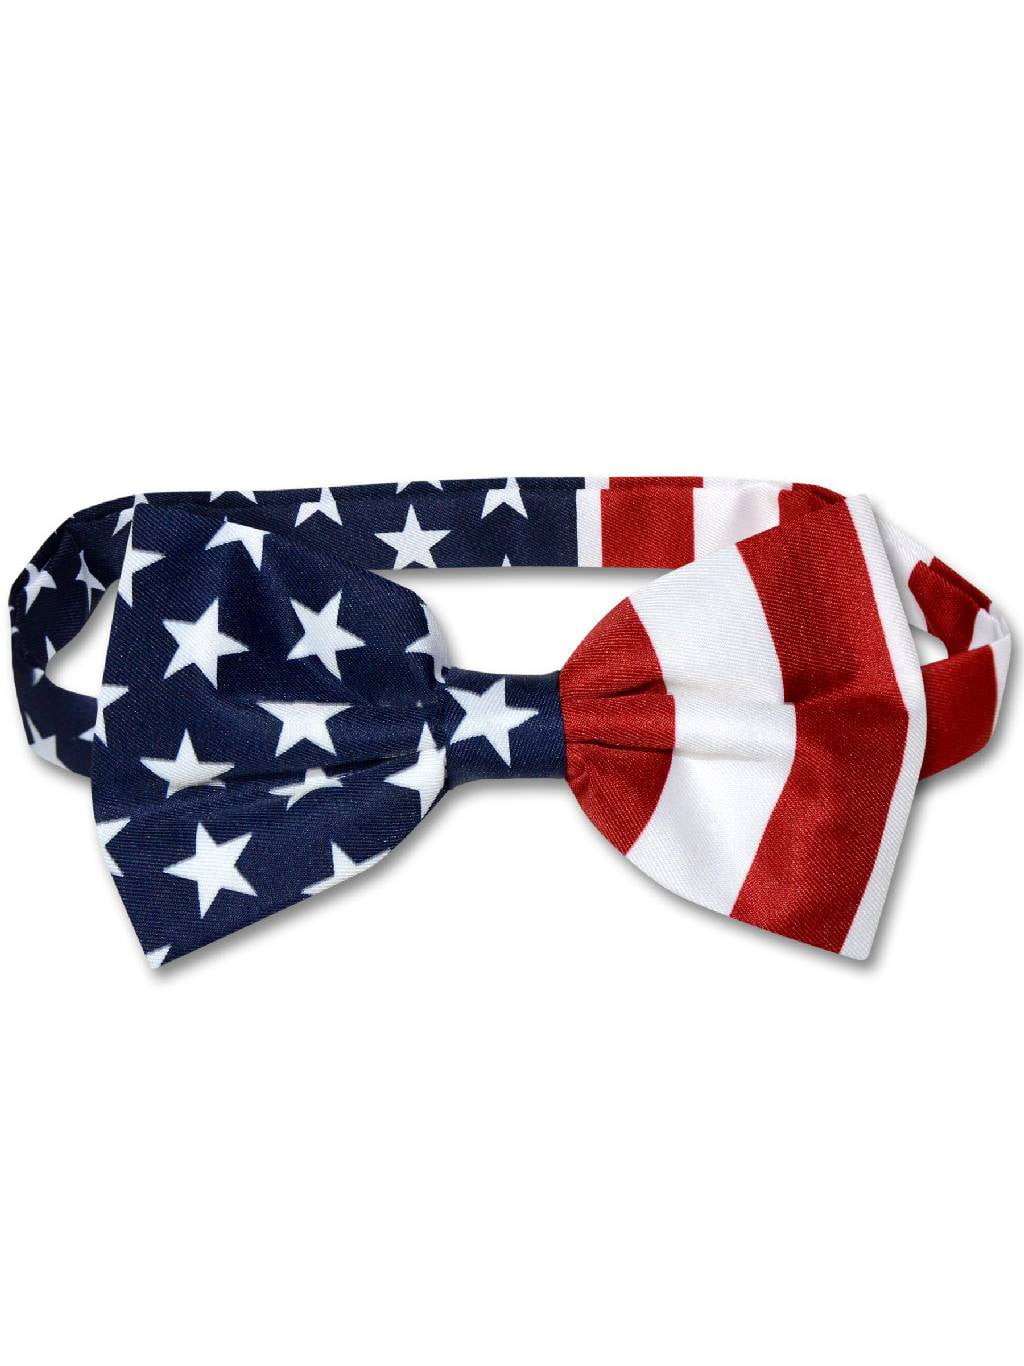 Mens American Flag Stars /& Stripes Red White and Blue Tie Necktie Neckwear